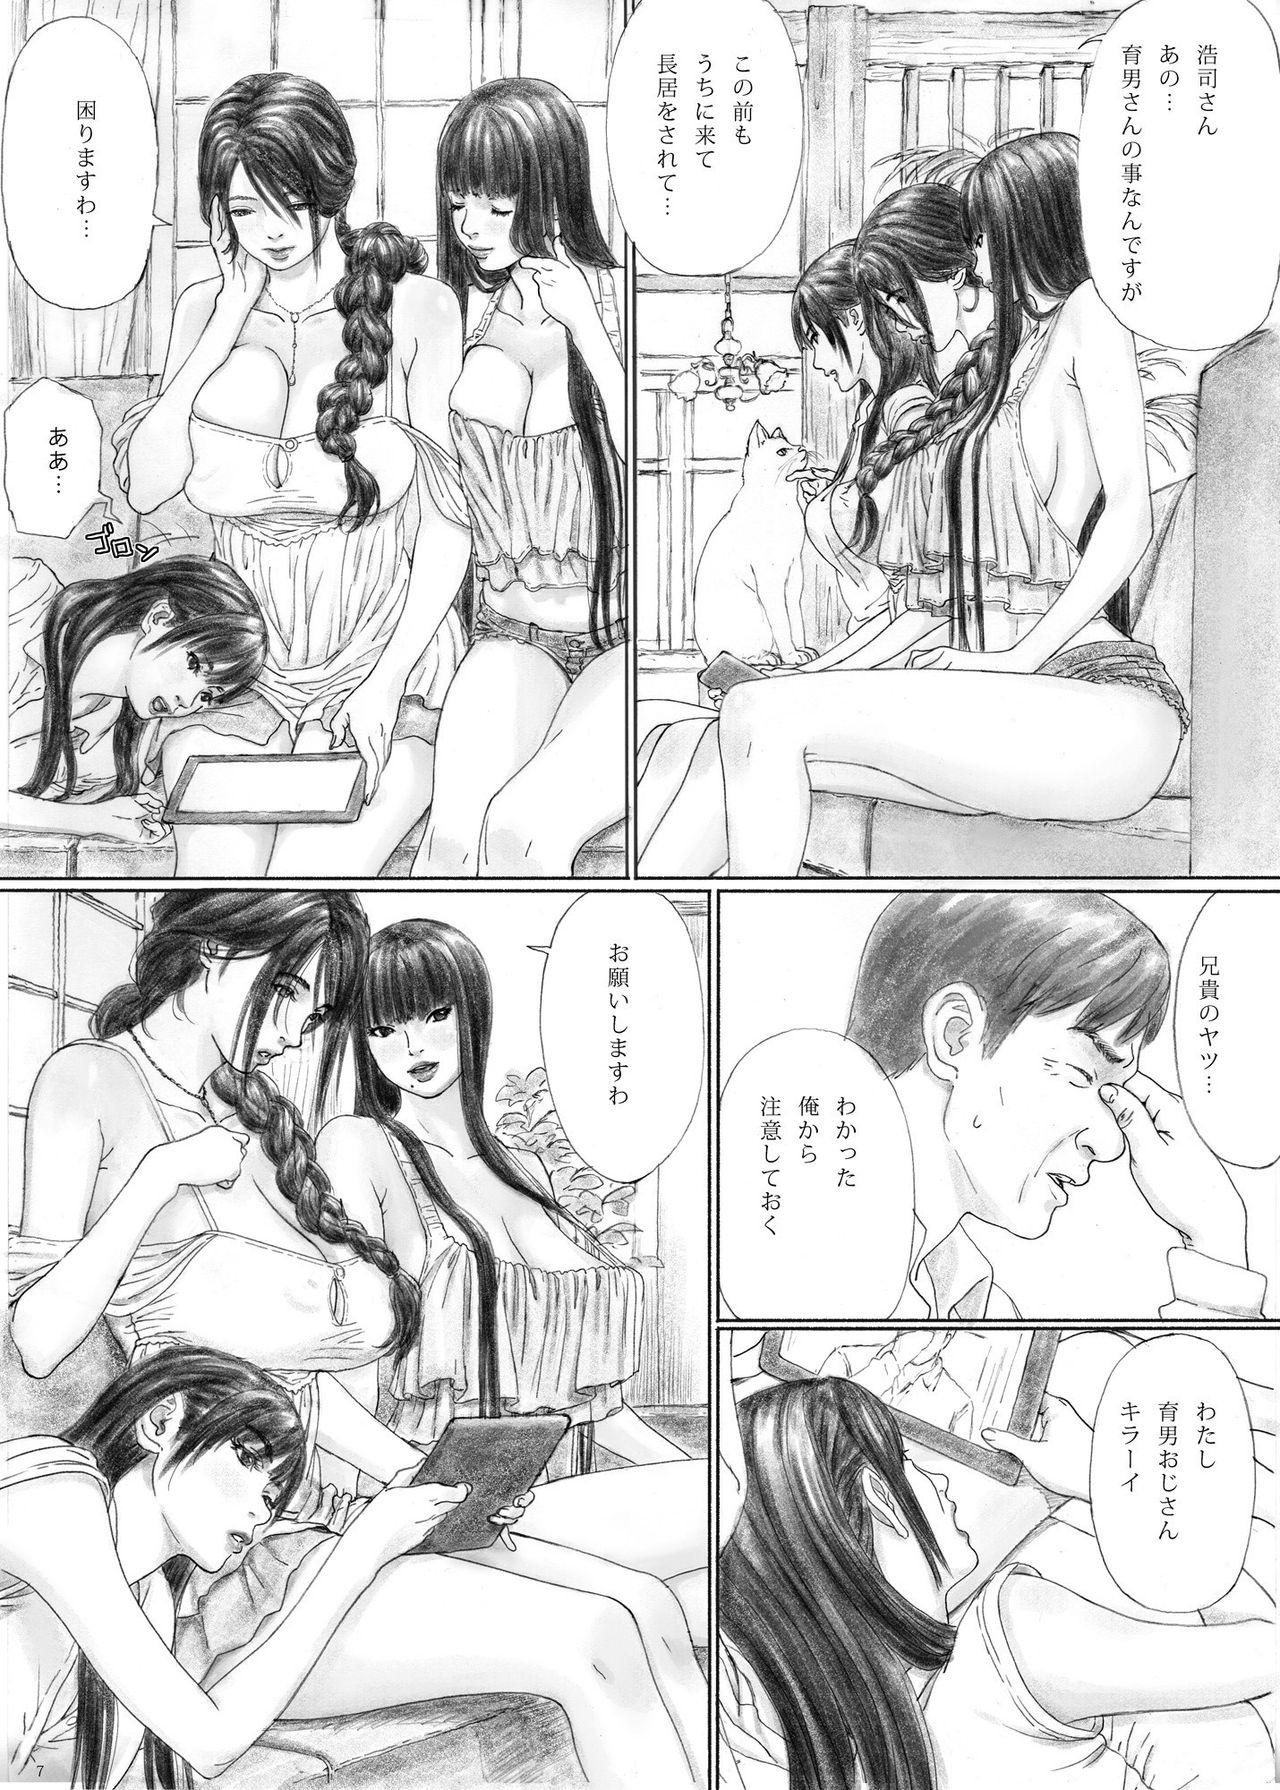 Sextoy Inyoku no Sumika 1 - Original Strip - Page 6